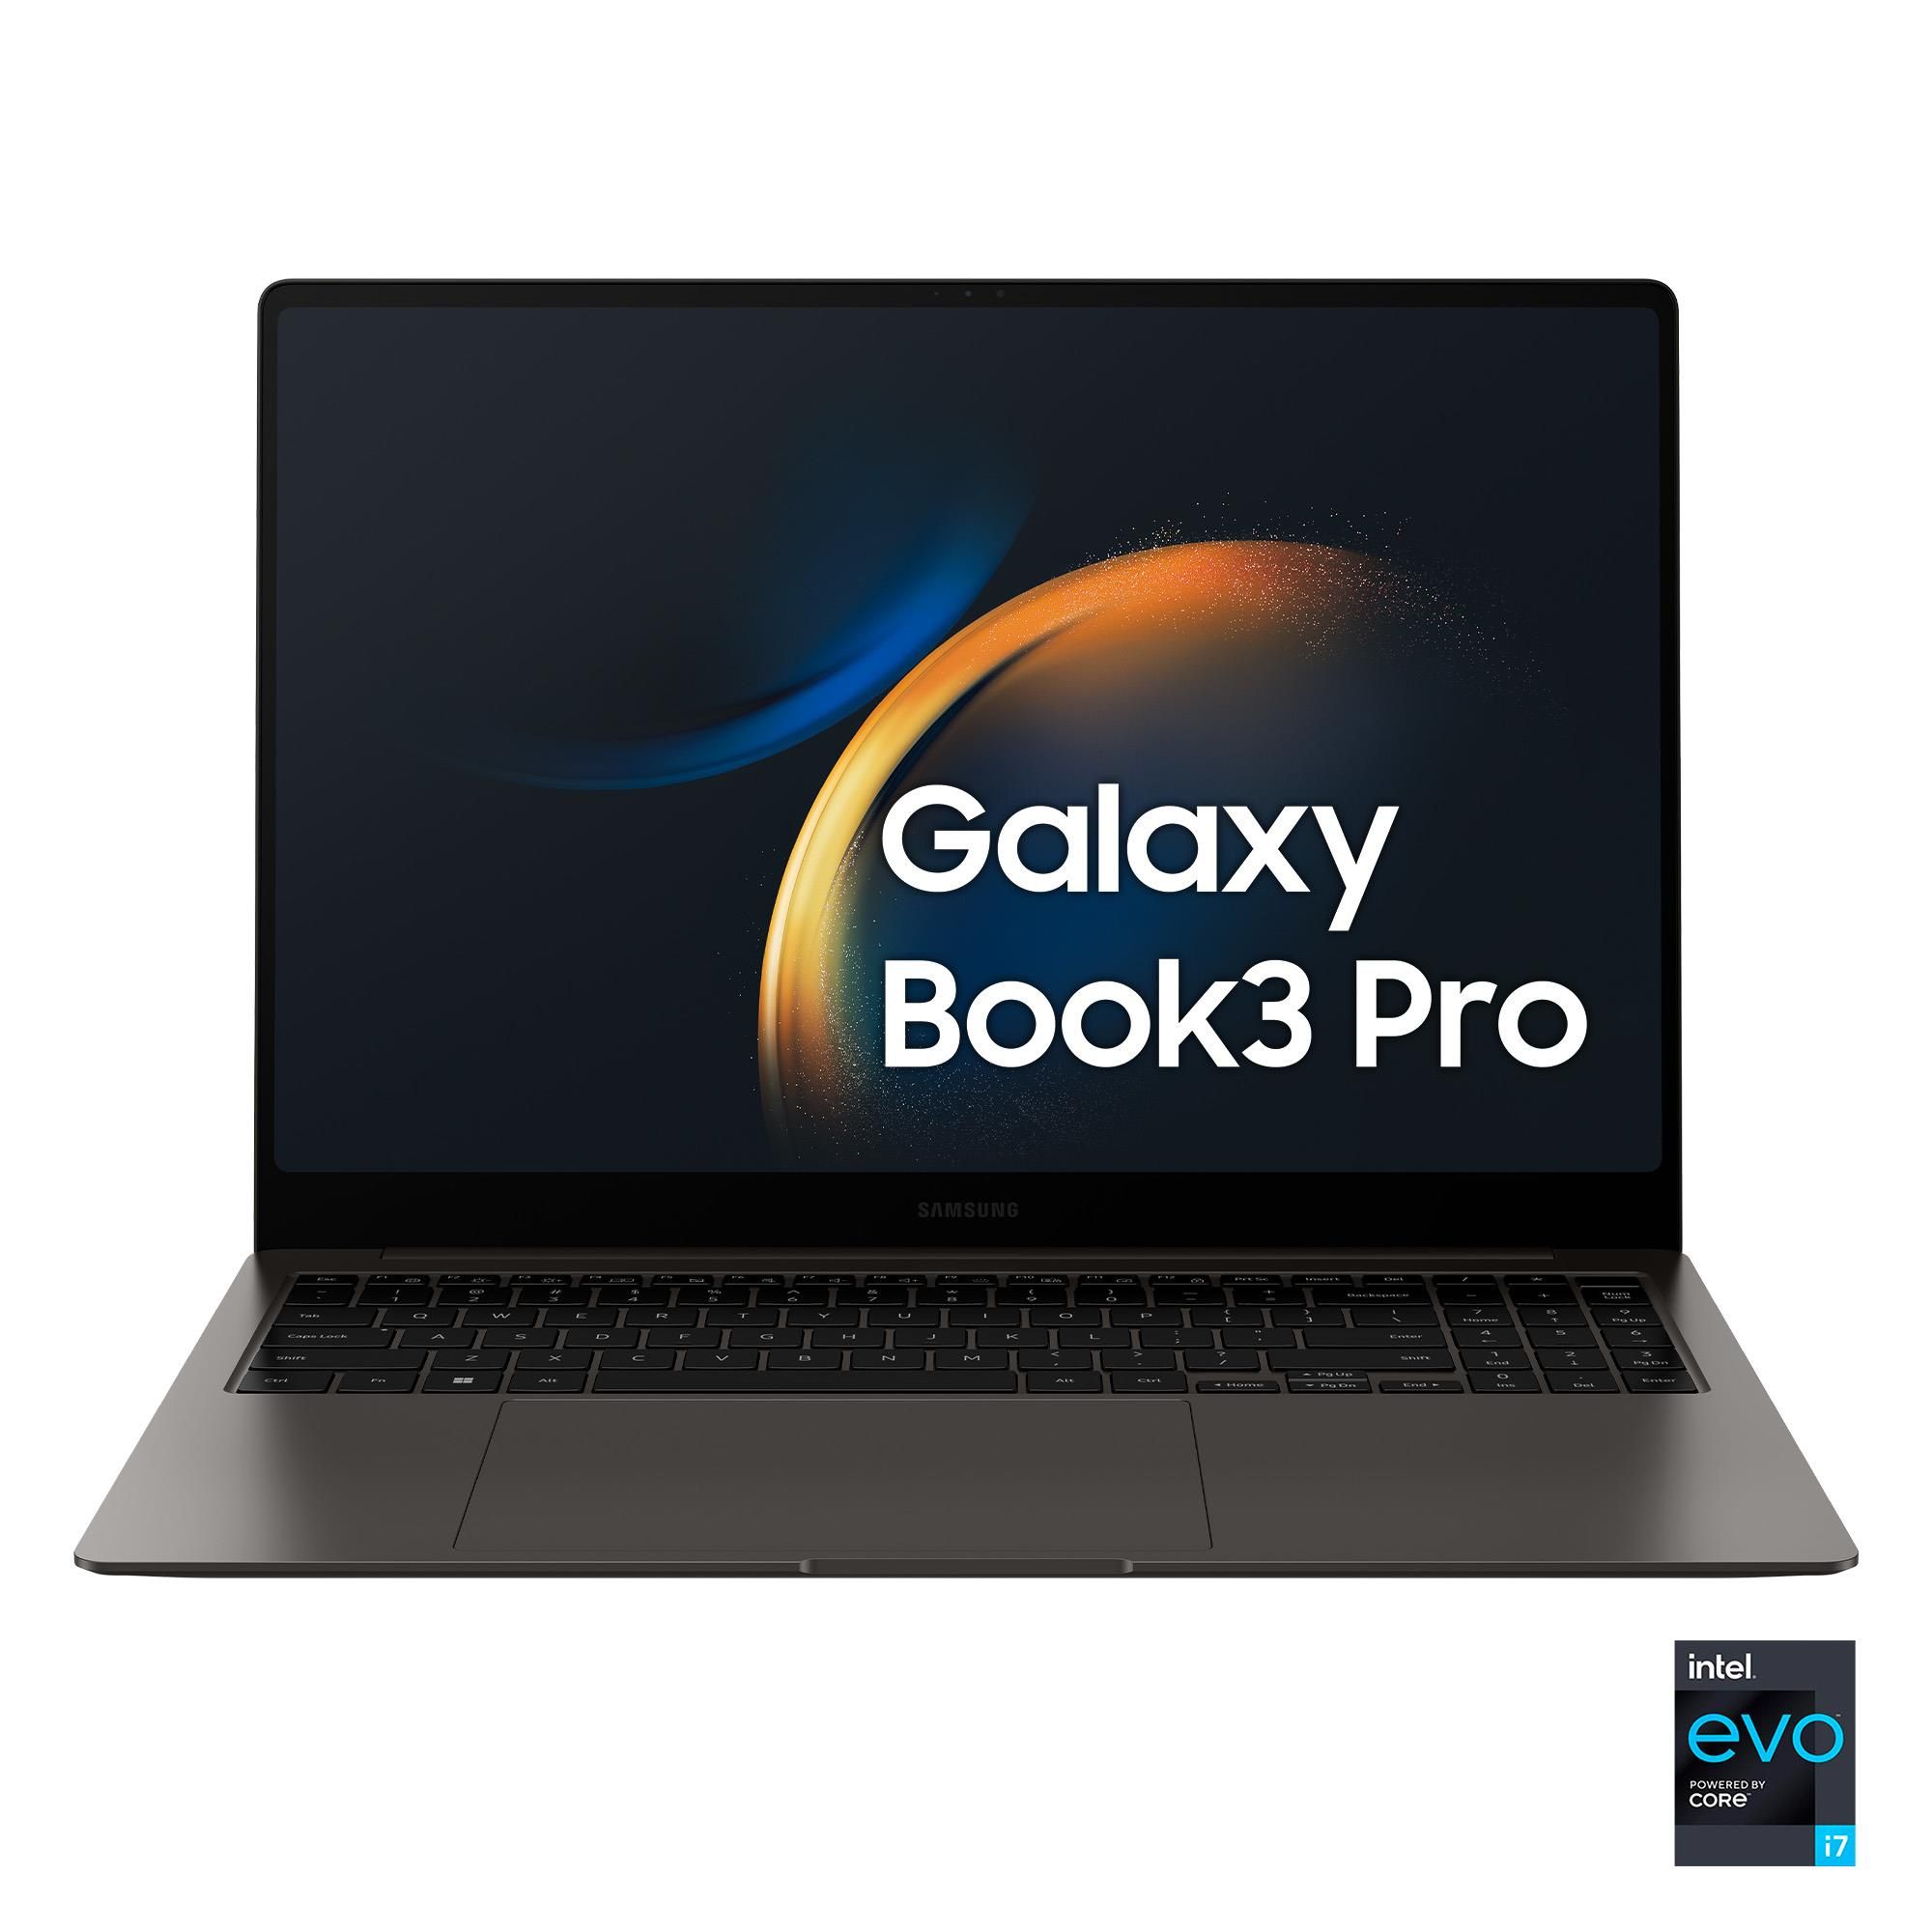 Samsung Galaxy Book3 Pro